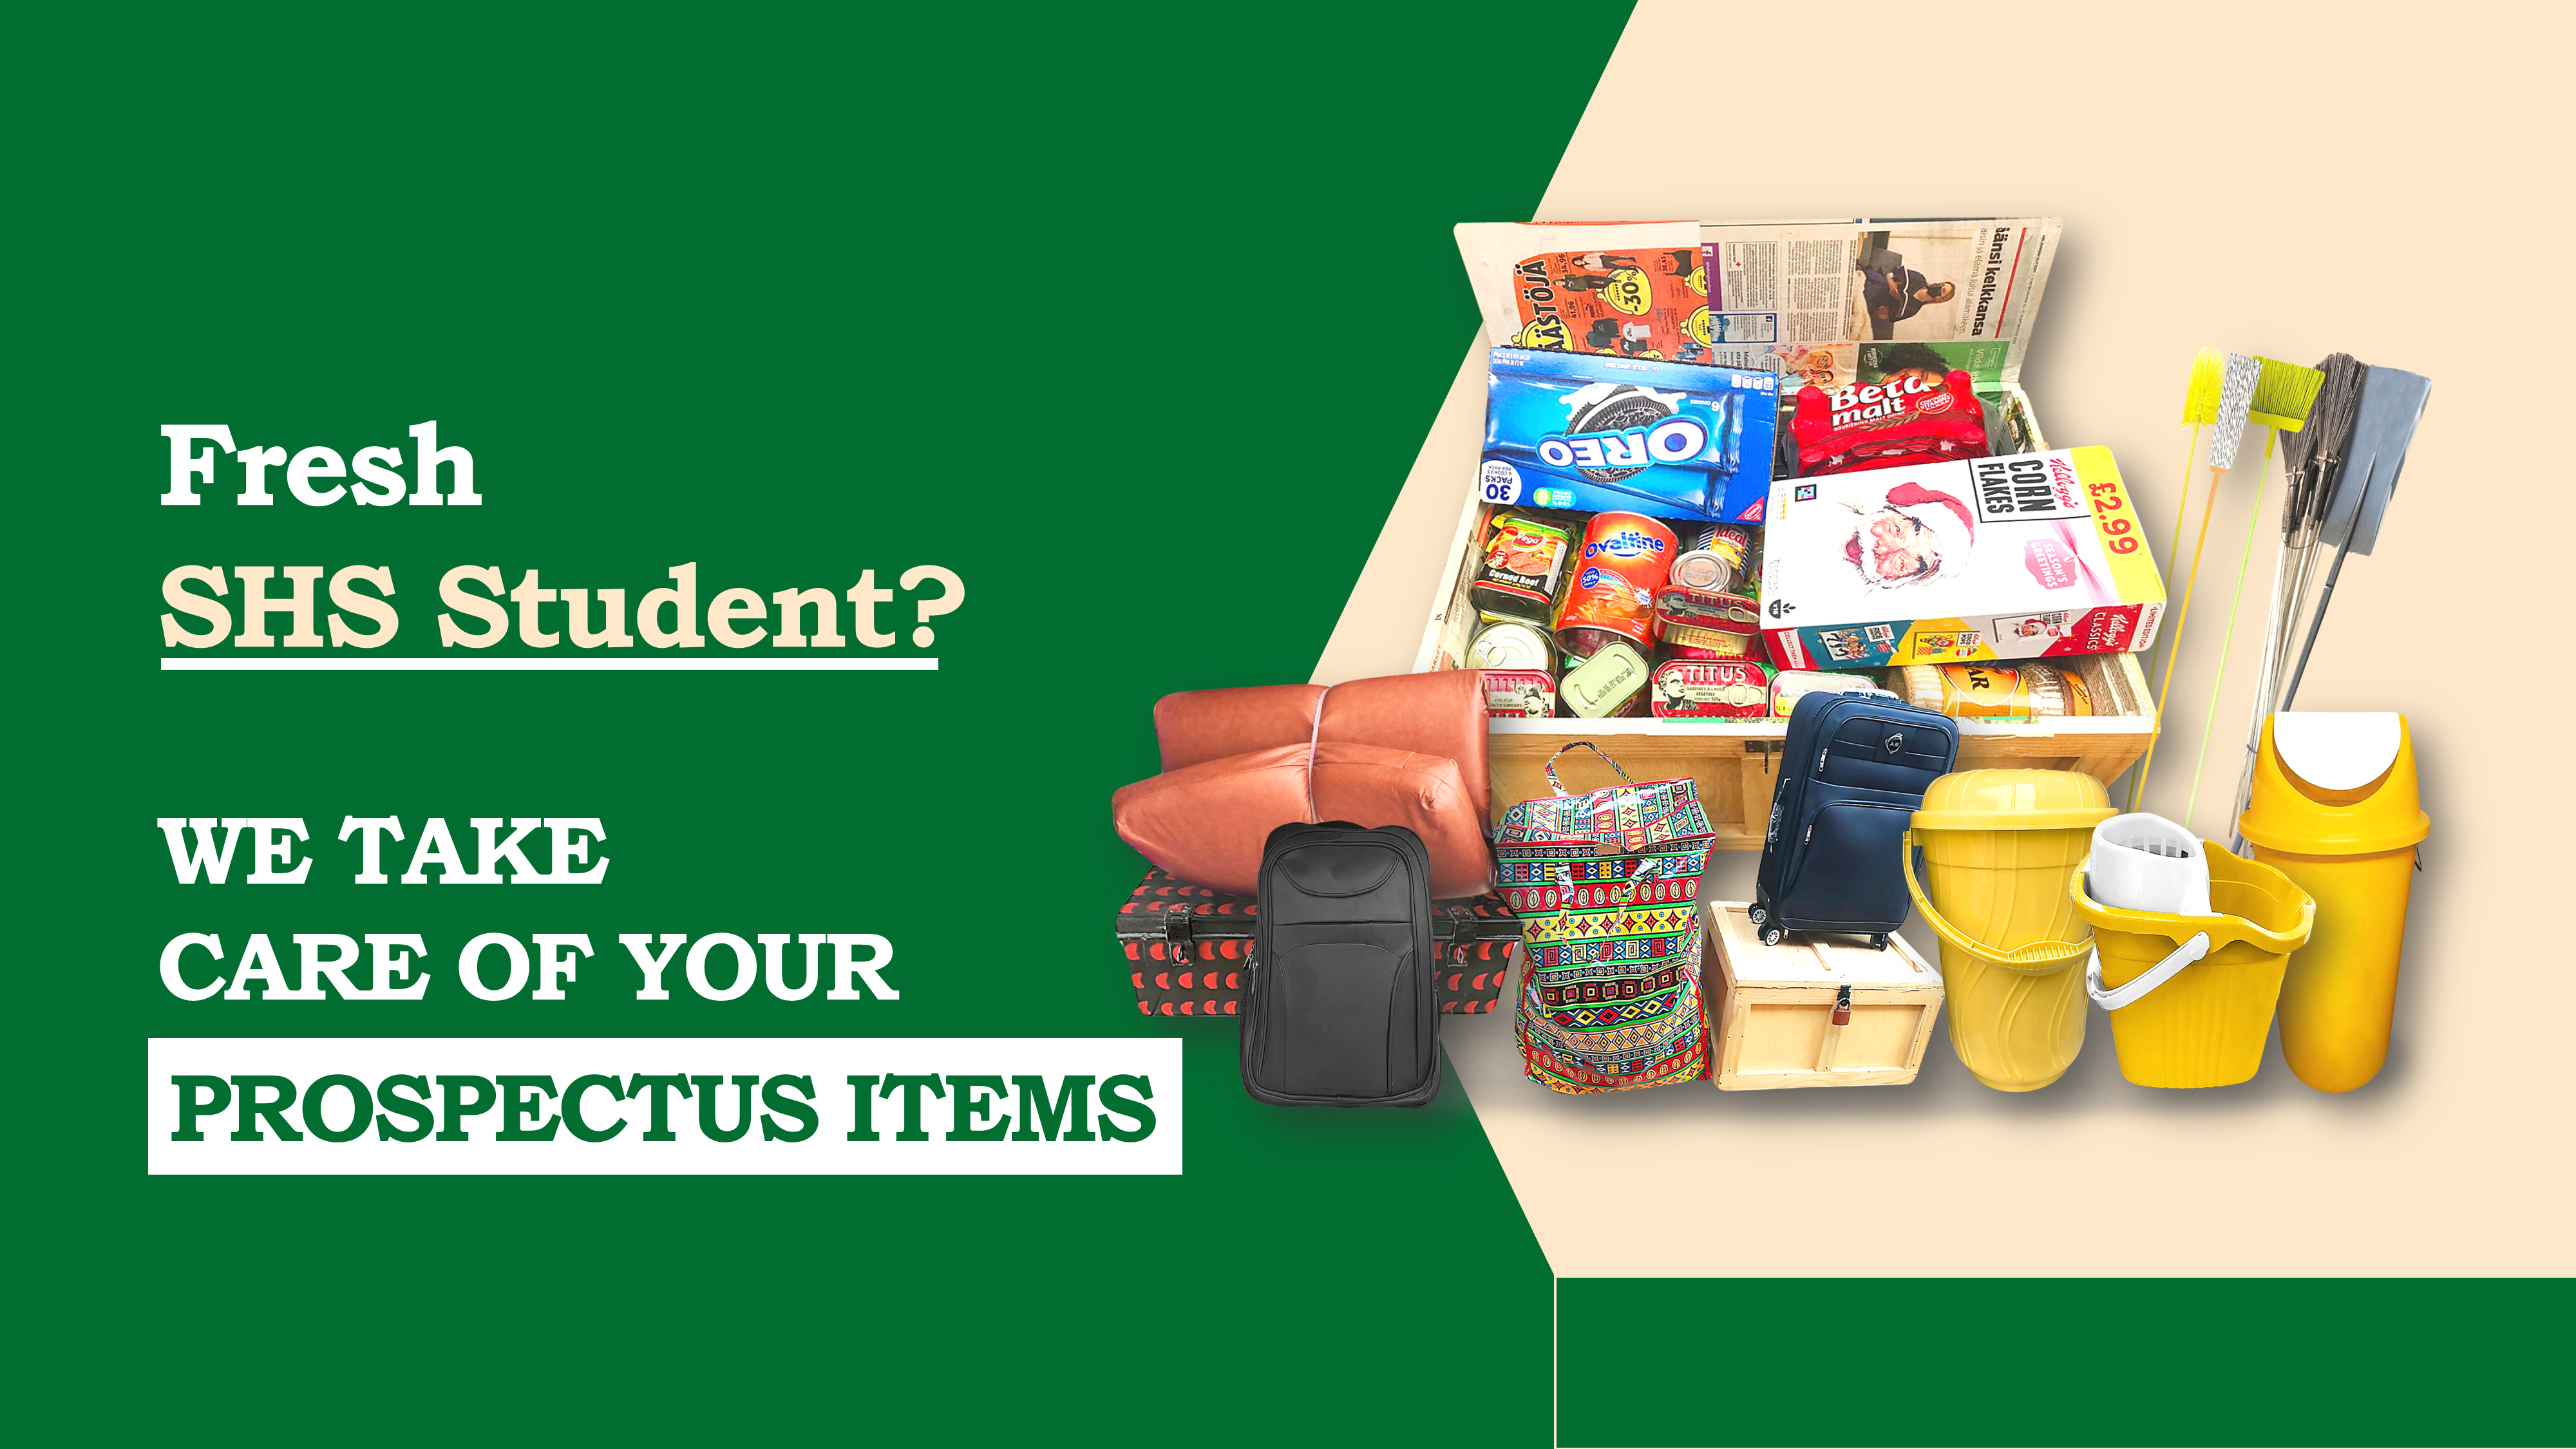 school supplies, stationery, backpack-5541102.jpg